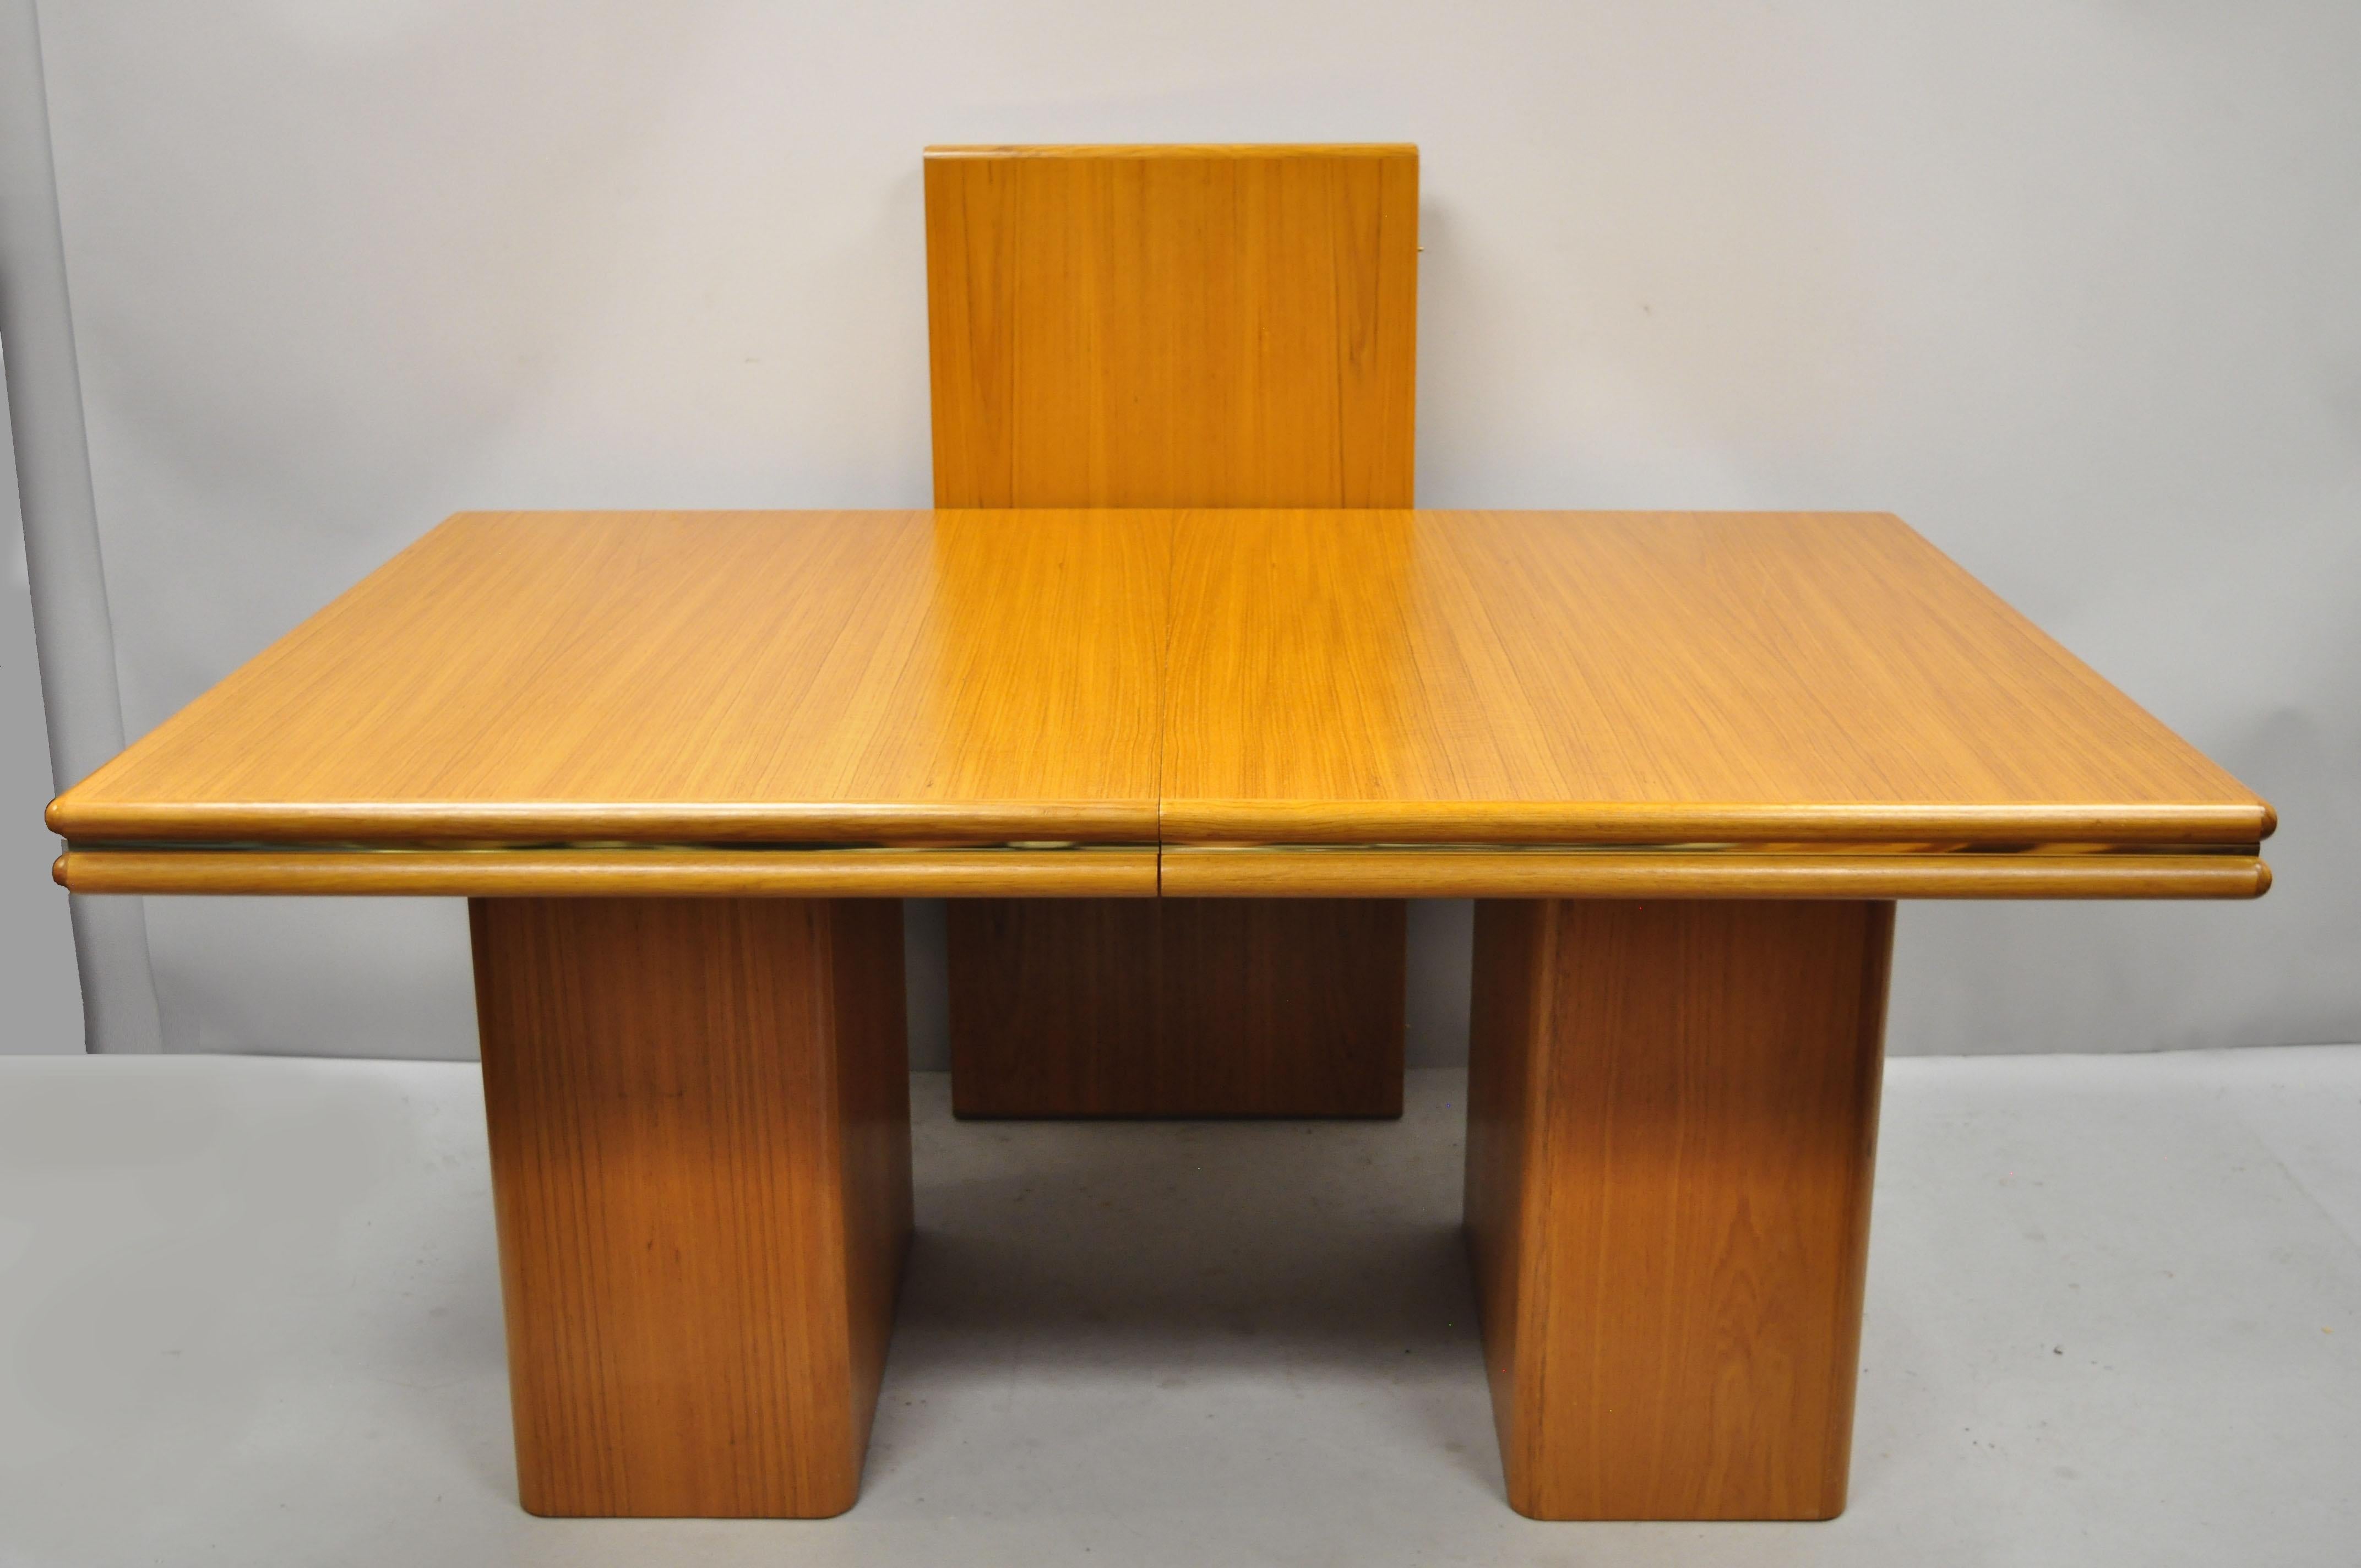 Sannemann midcentury Danish modern teak double pedestal dining room table. Item features (1) 21